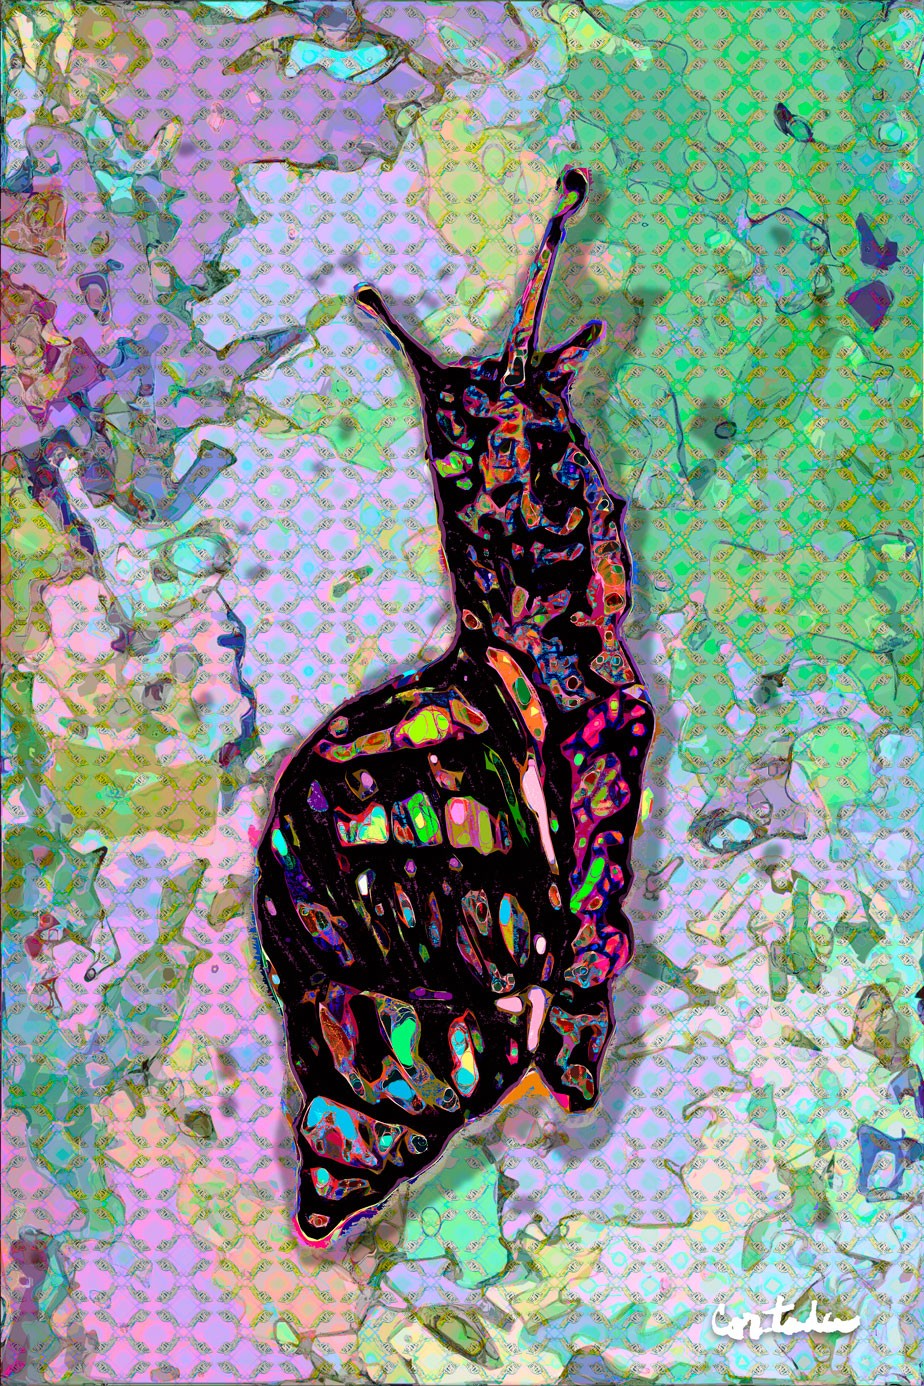 Xavier Cortada, “Florida is… Tree Snails,” digital art, 2015. (www.florida-is.com)